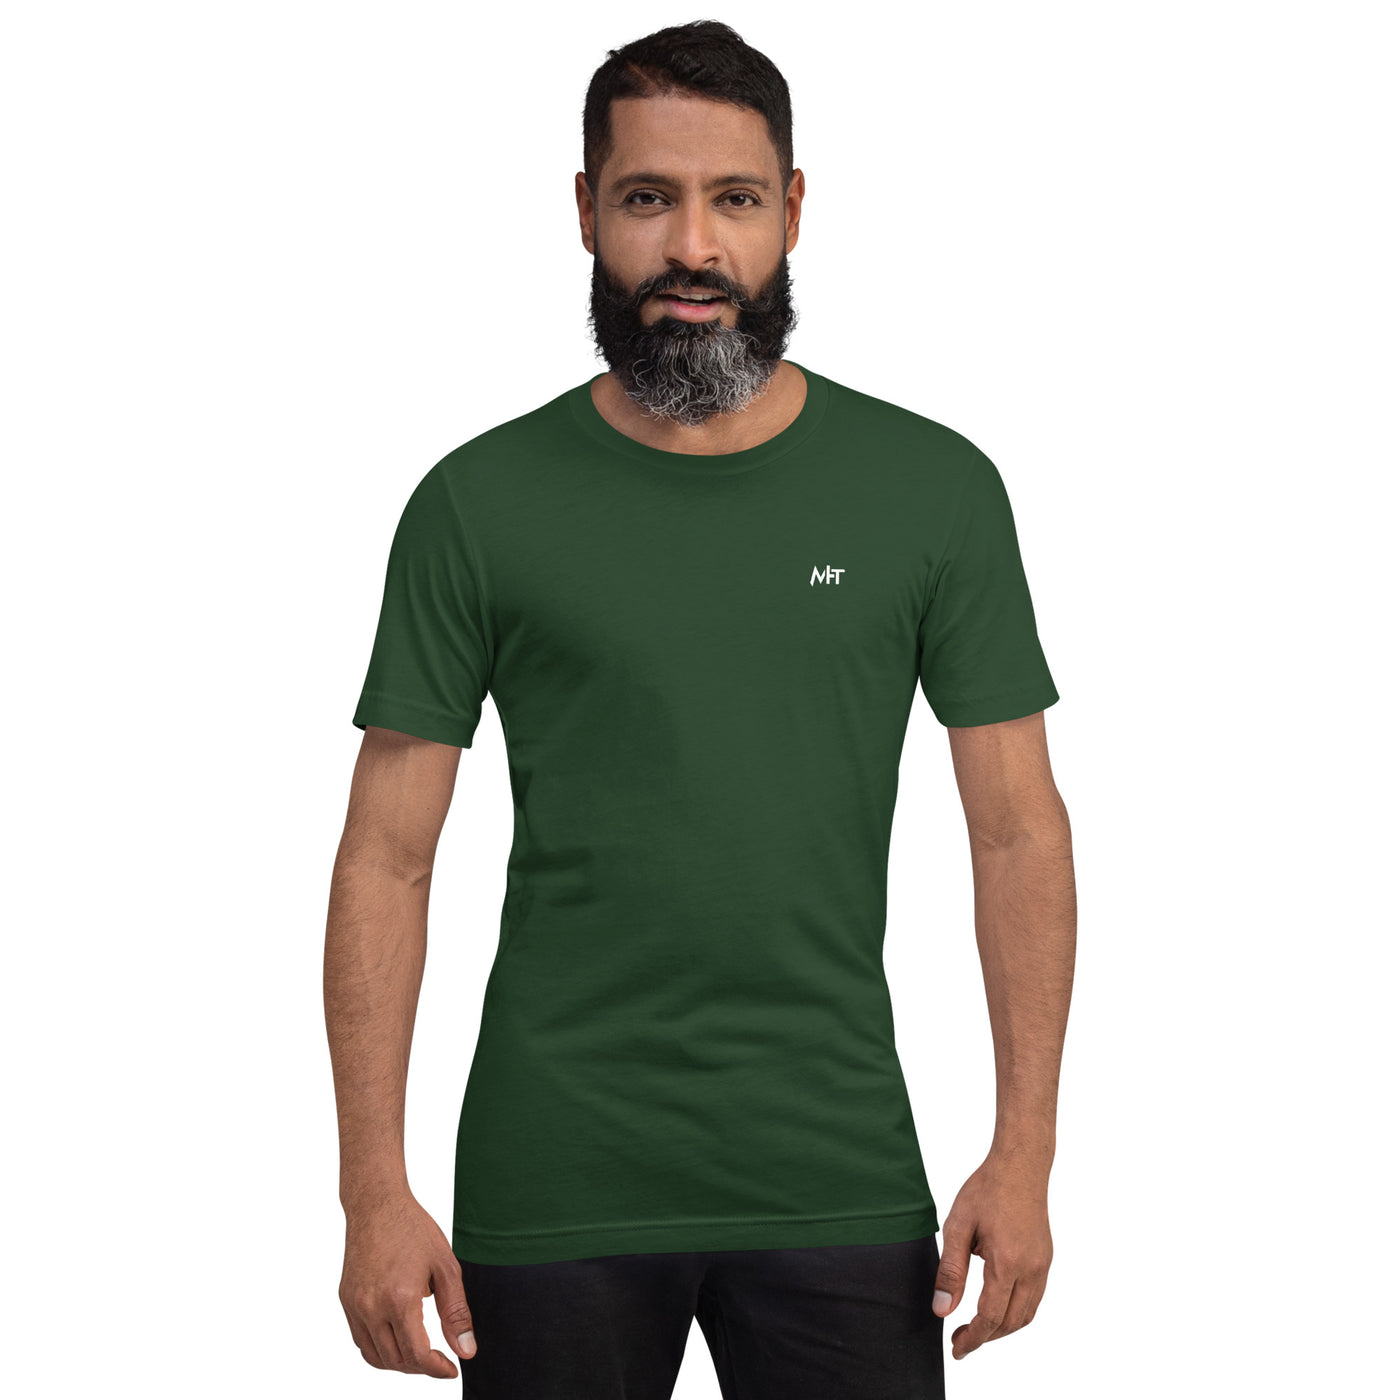 Plan B V5 Unisex t-shirt ( Back Print )